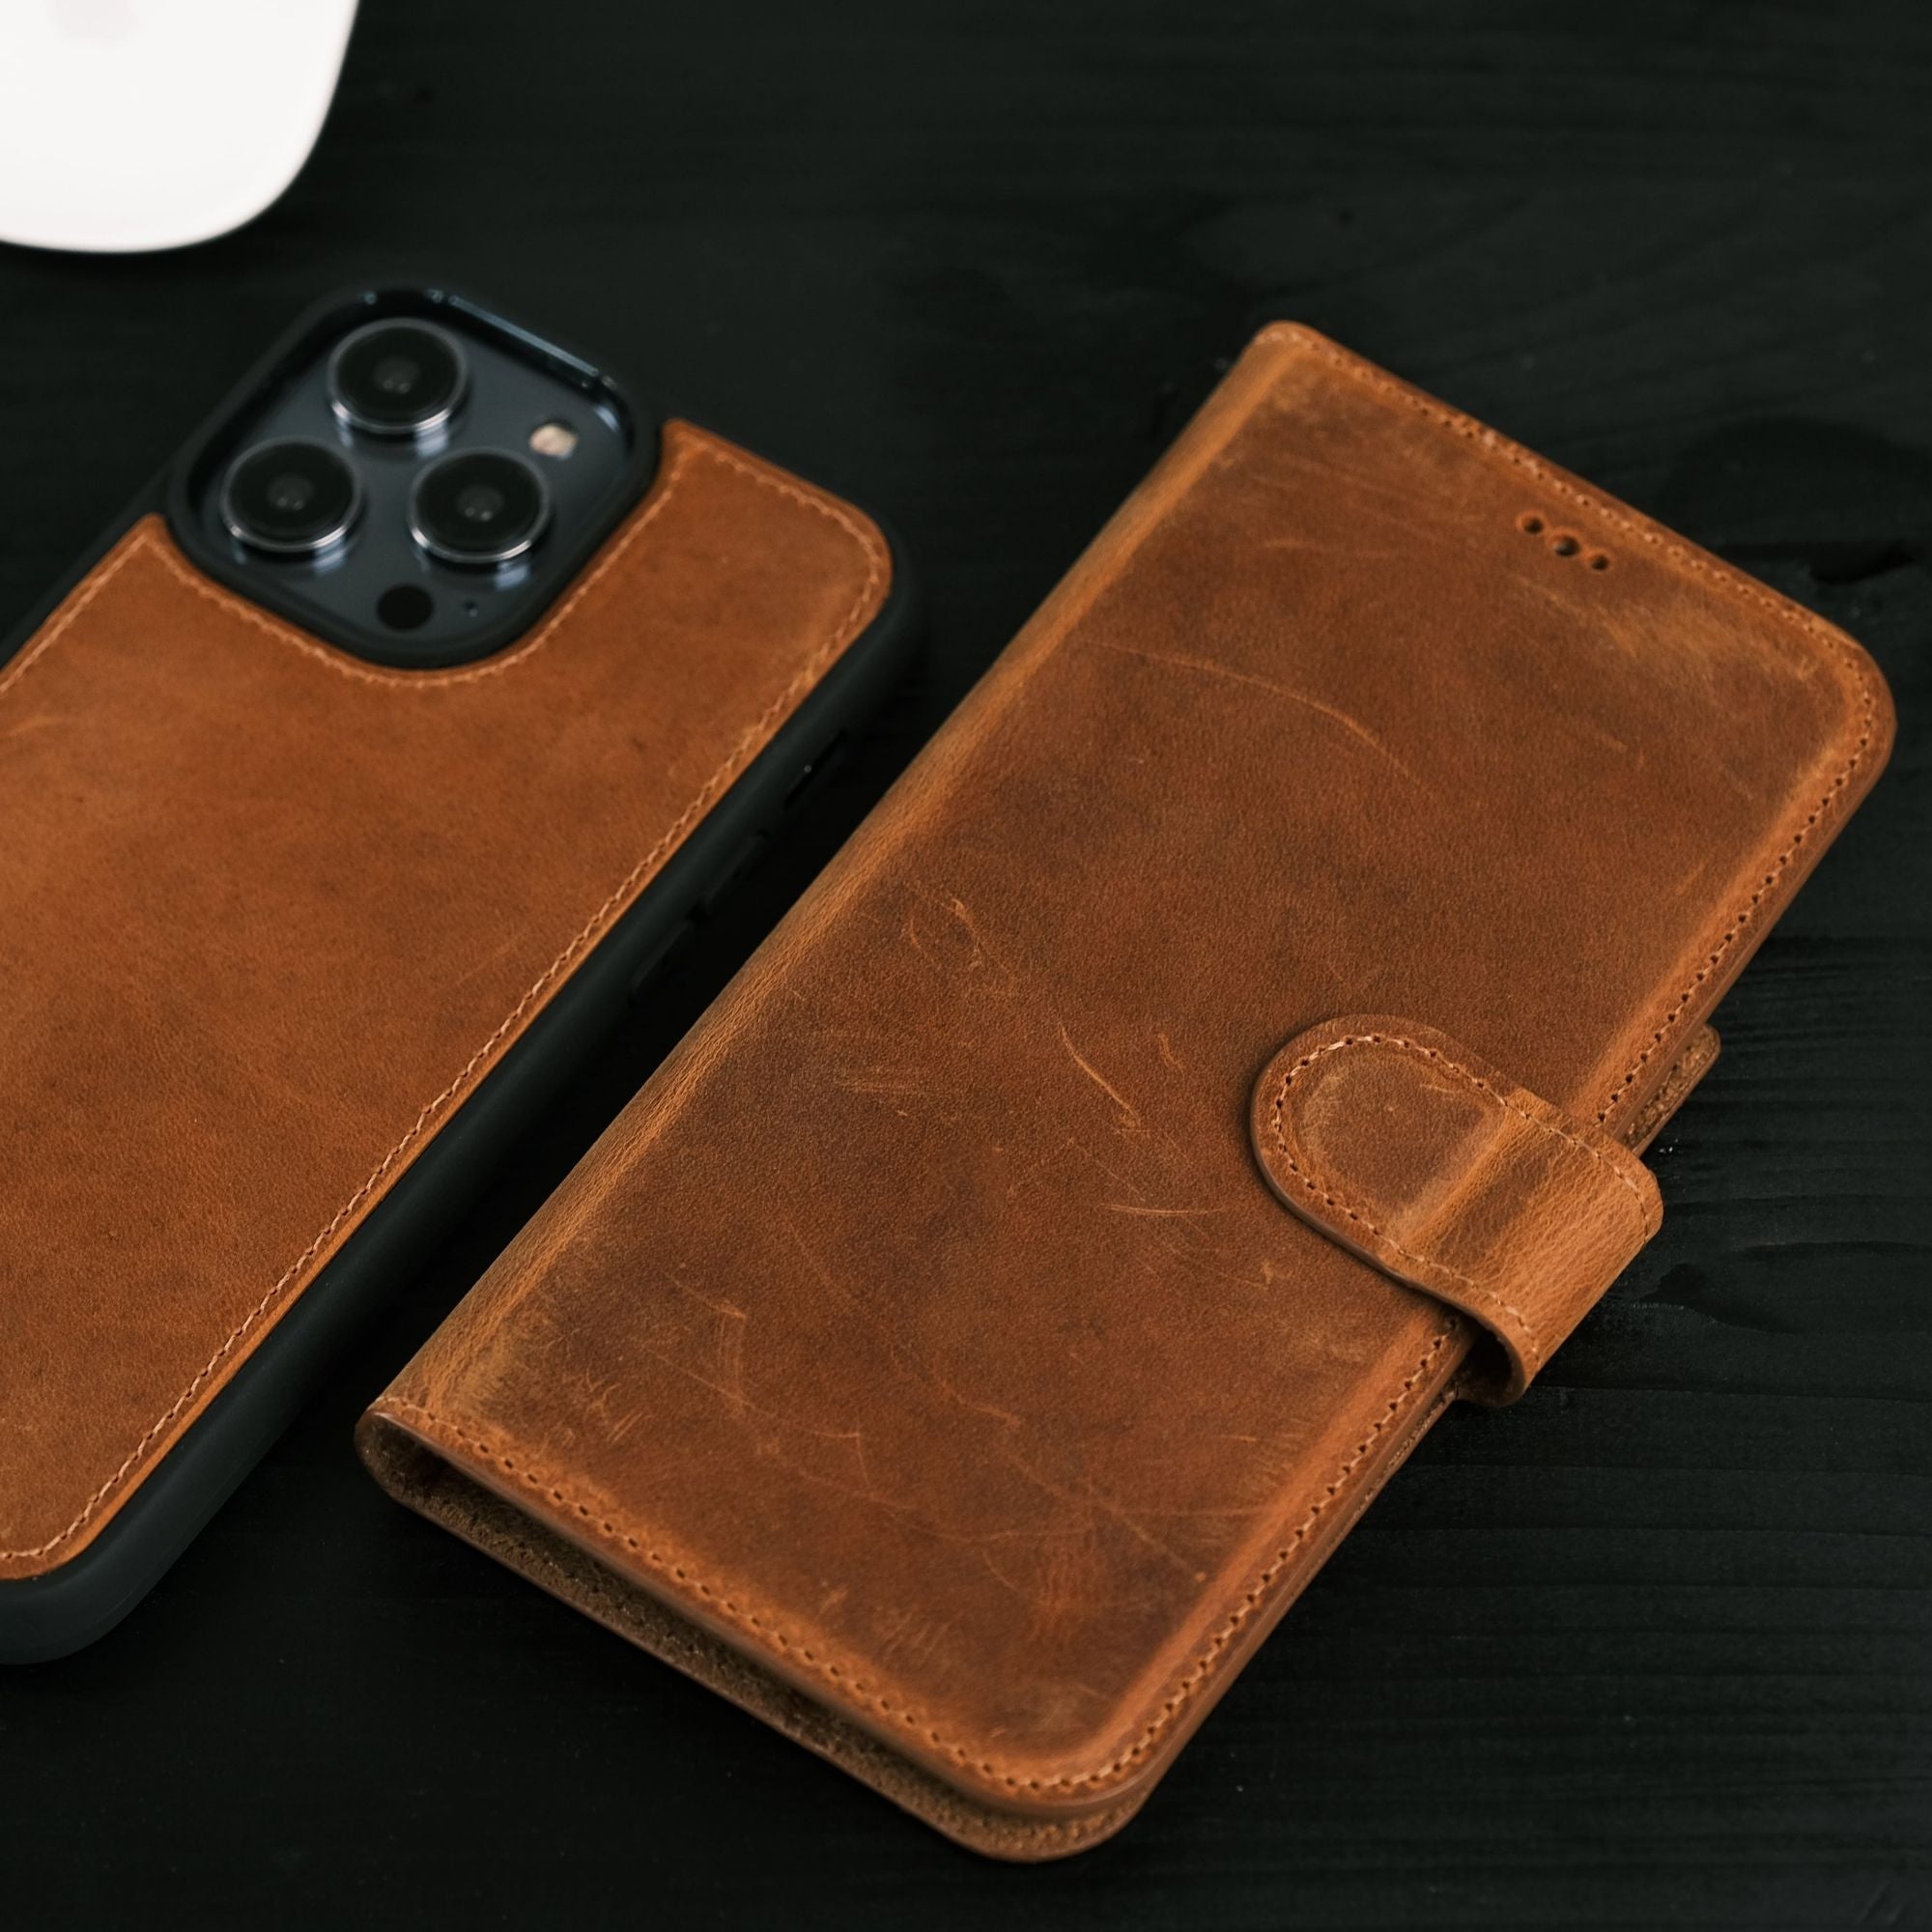 Casper Leather Wallet: Stylish iPhone Protection - TORONATA